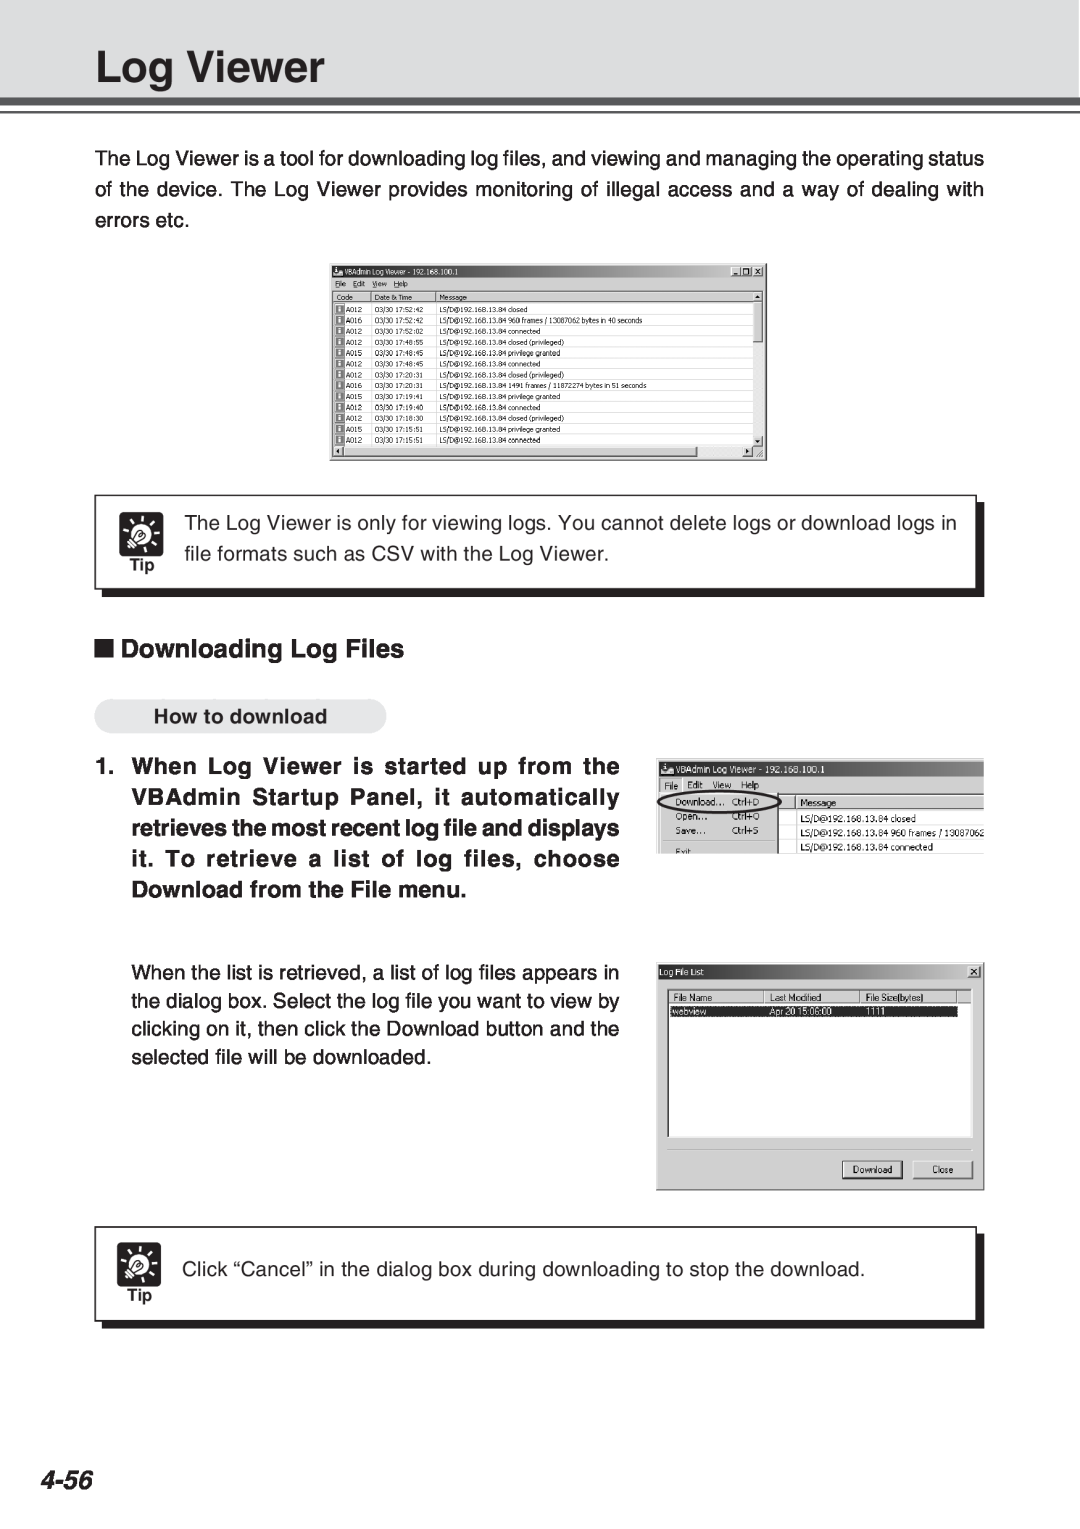 Canon Vb-C50fi user manual Log Viewer, Downloading Log Files, 4-56, How to download 